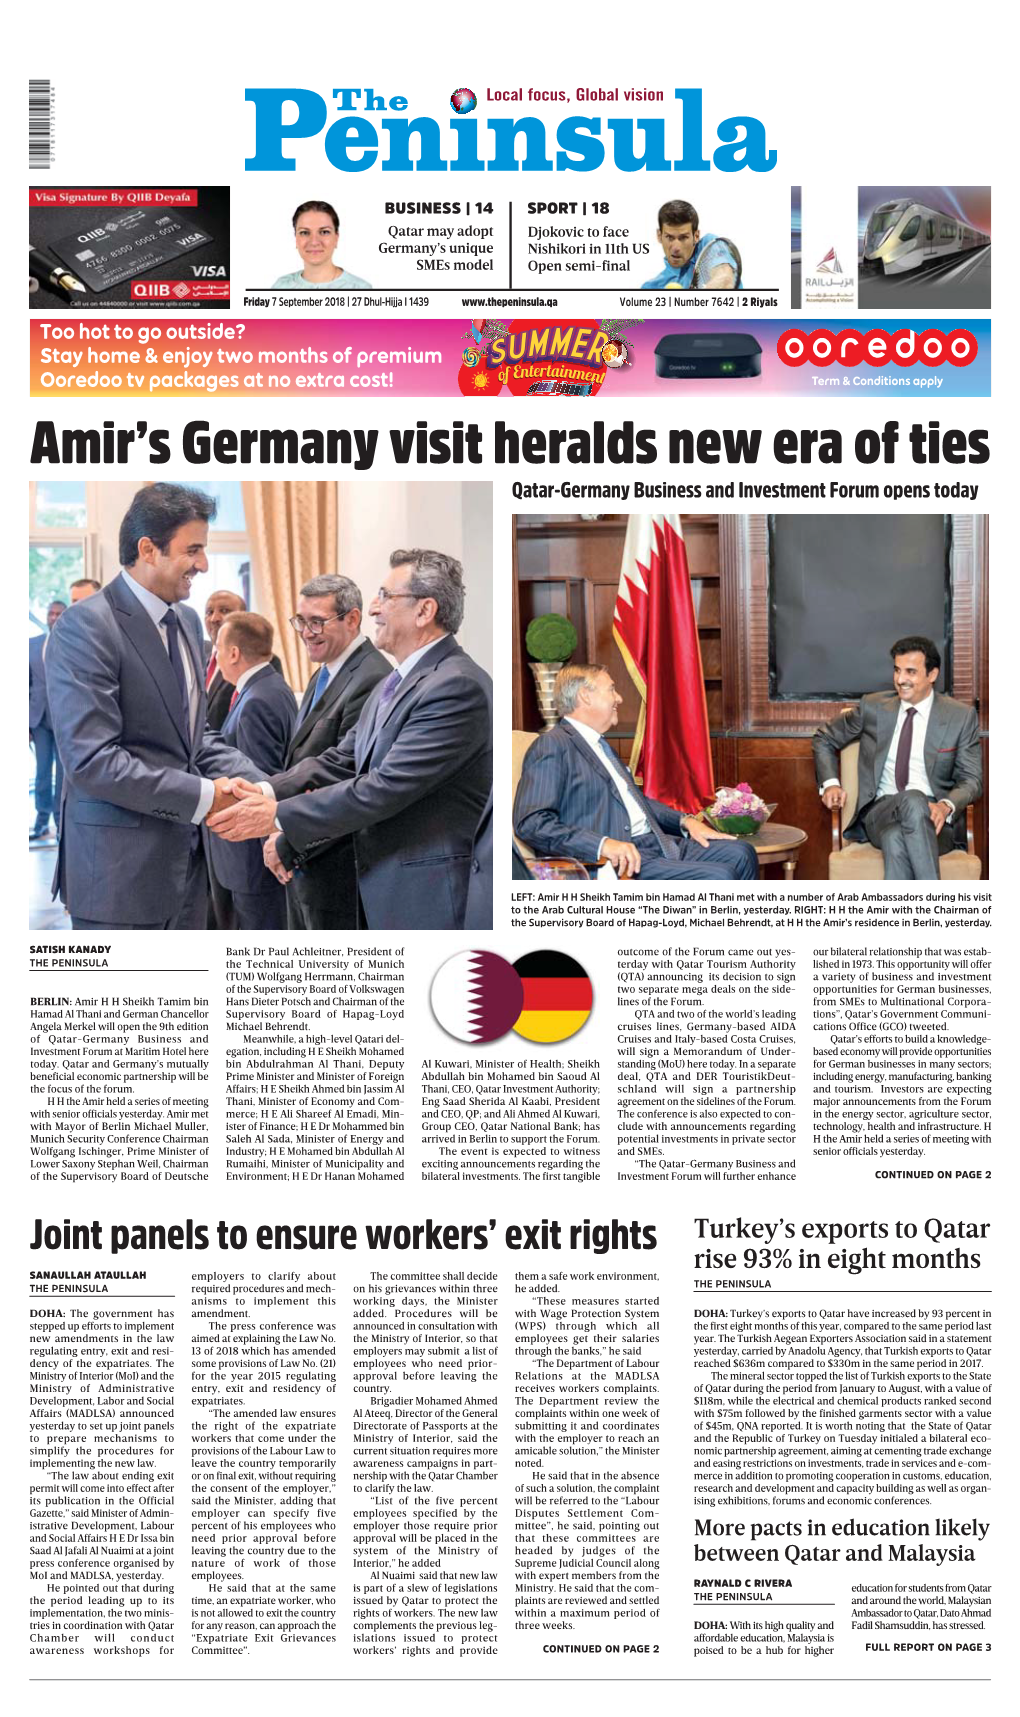 Amir's Germany Visit Heralds New Era of Ties